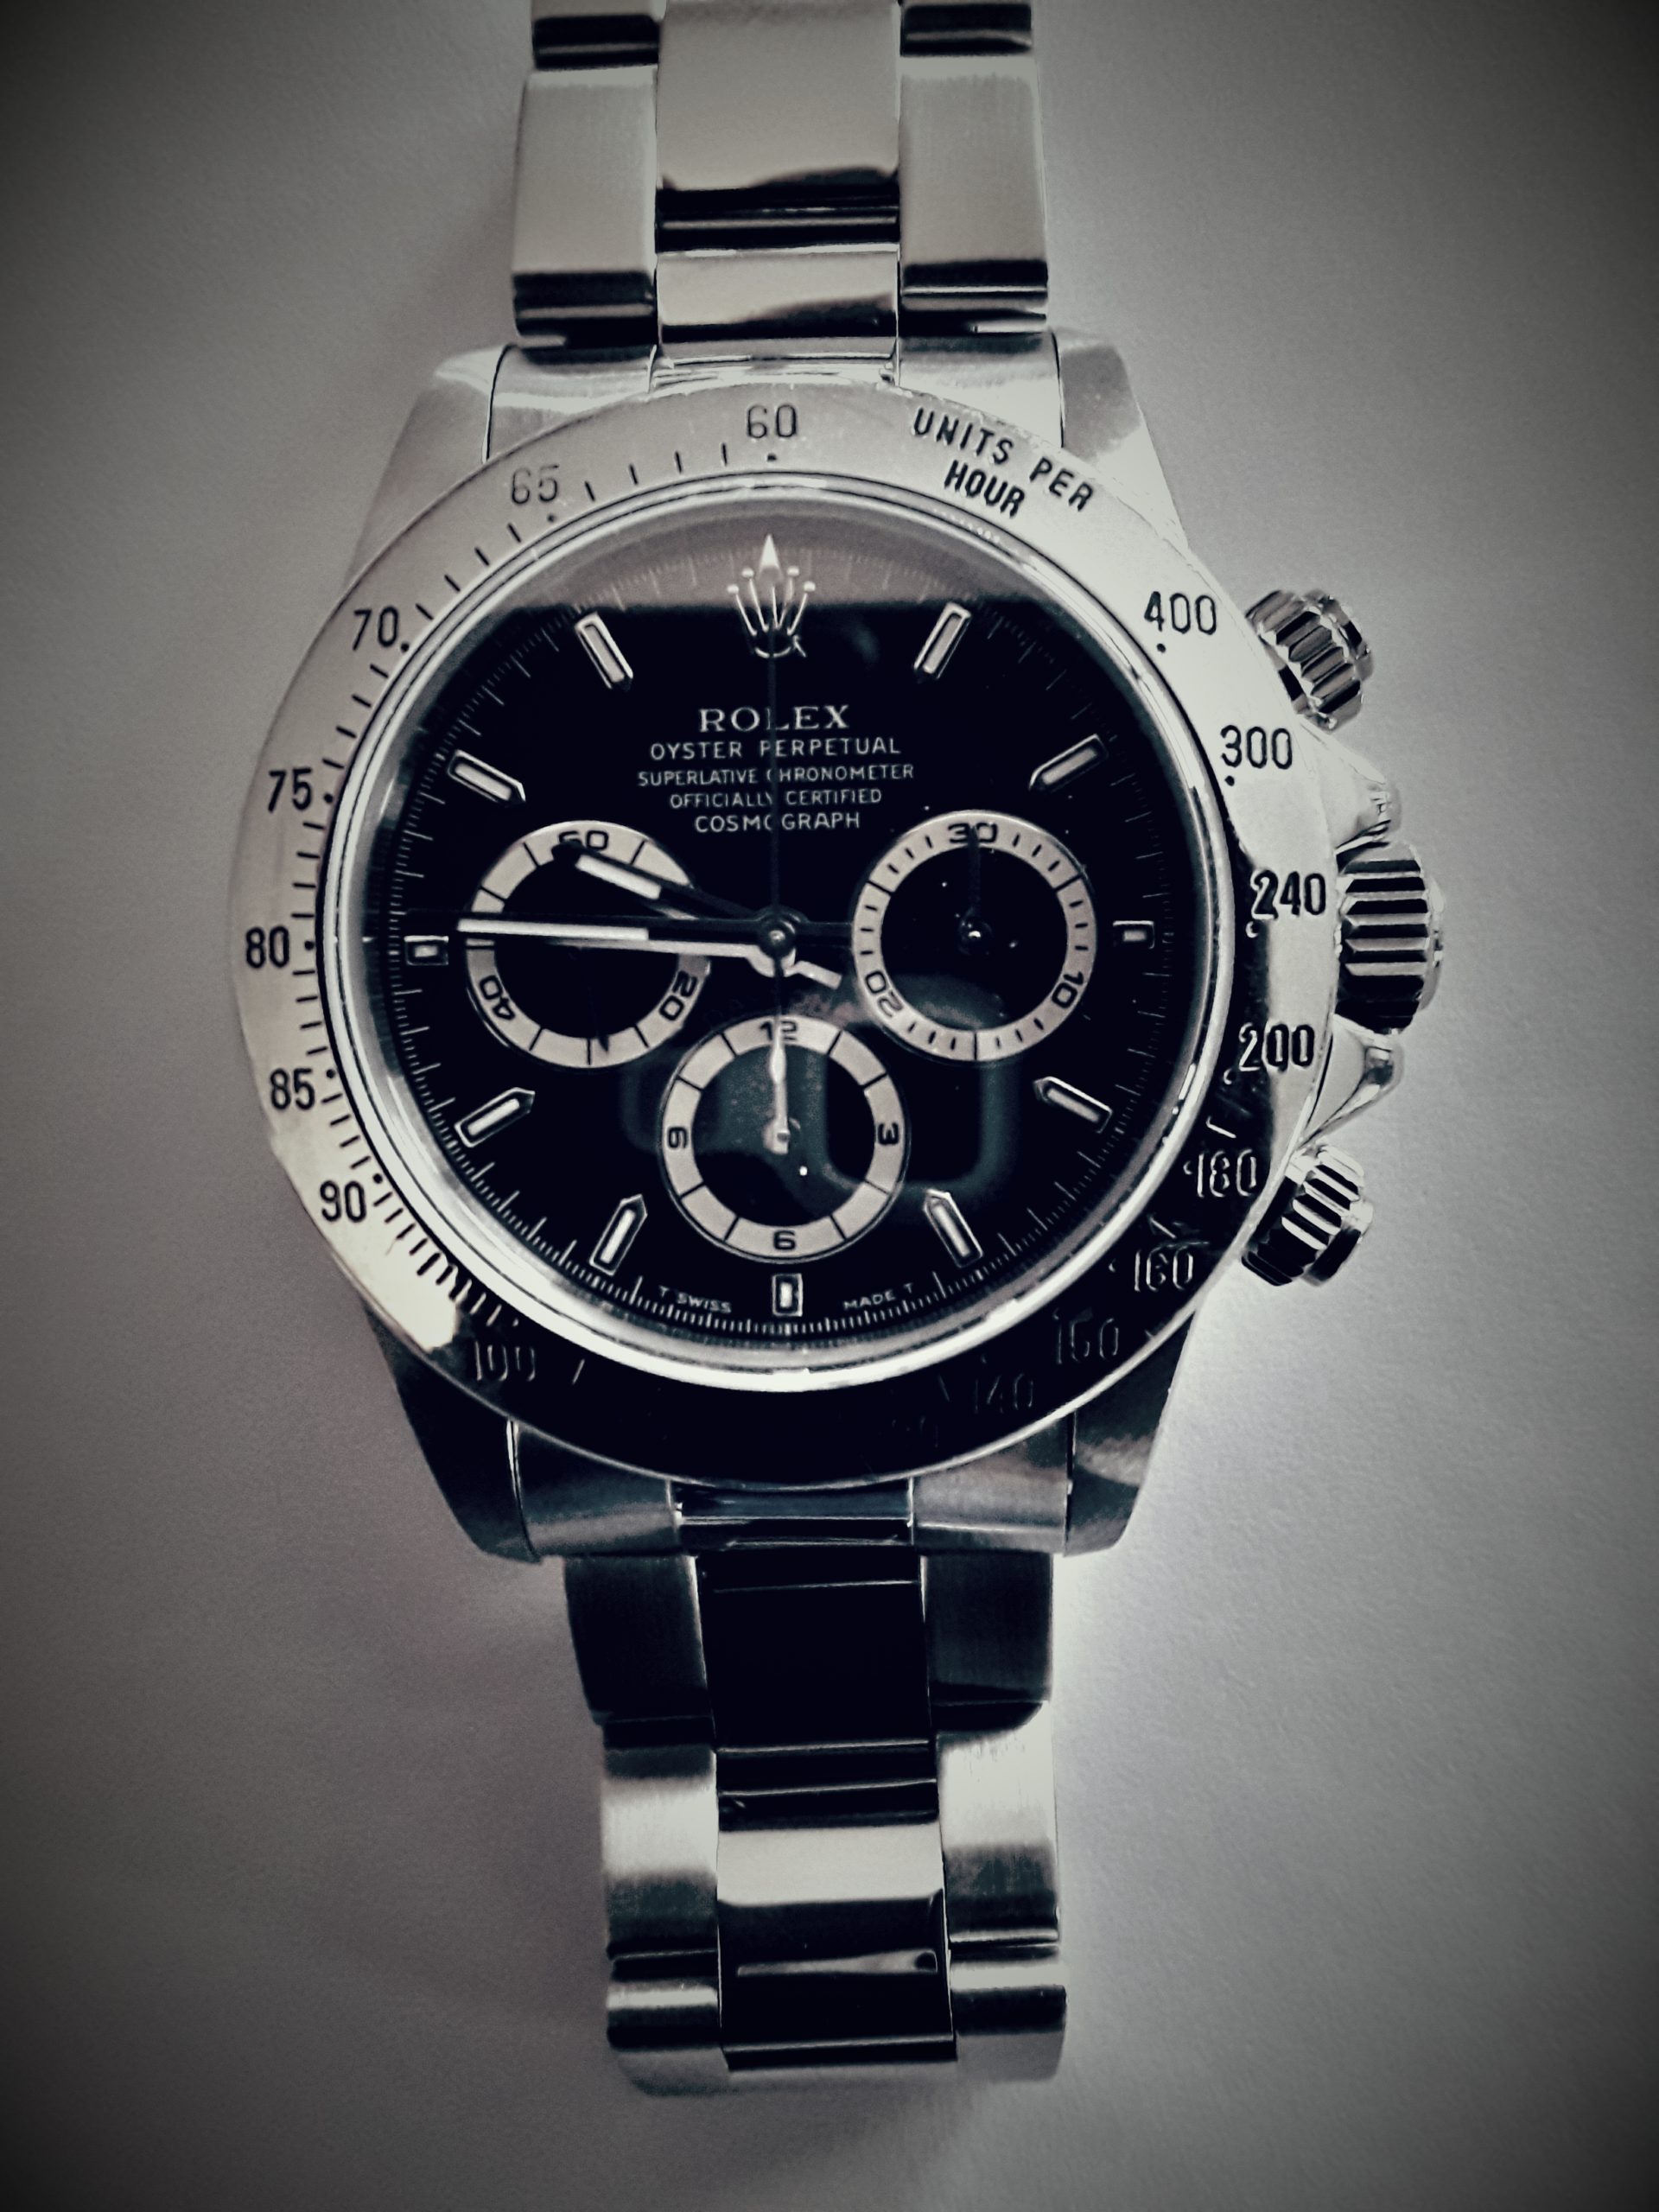 Men’s wrist watch – Armbanduhr Herren Rolex